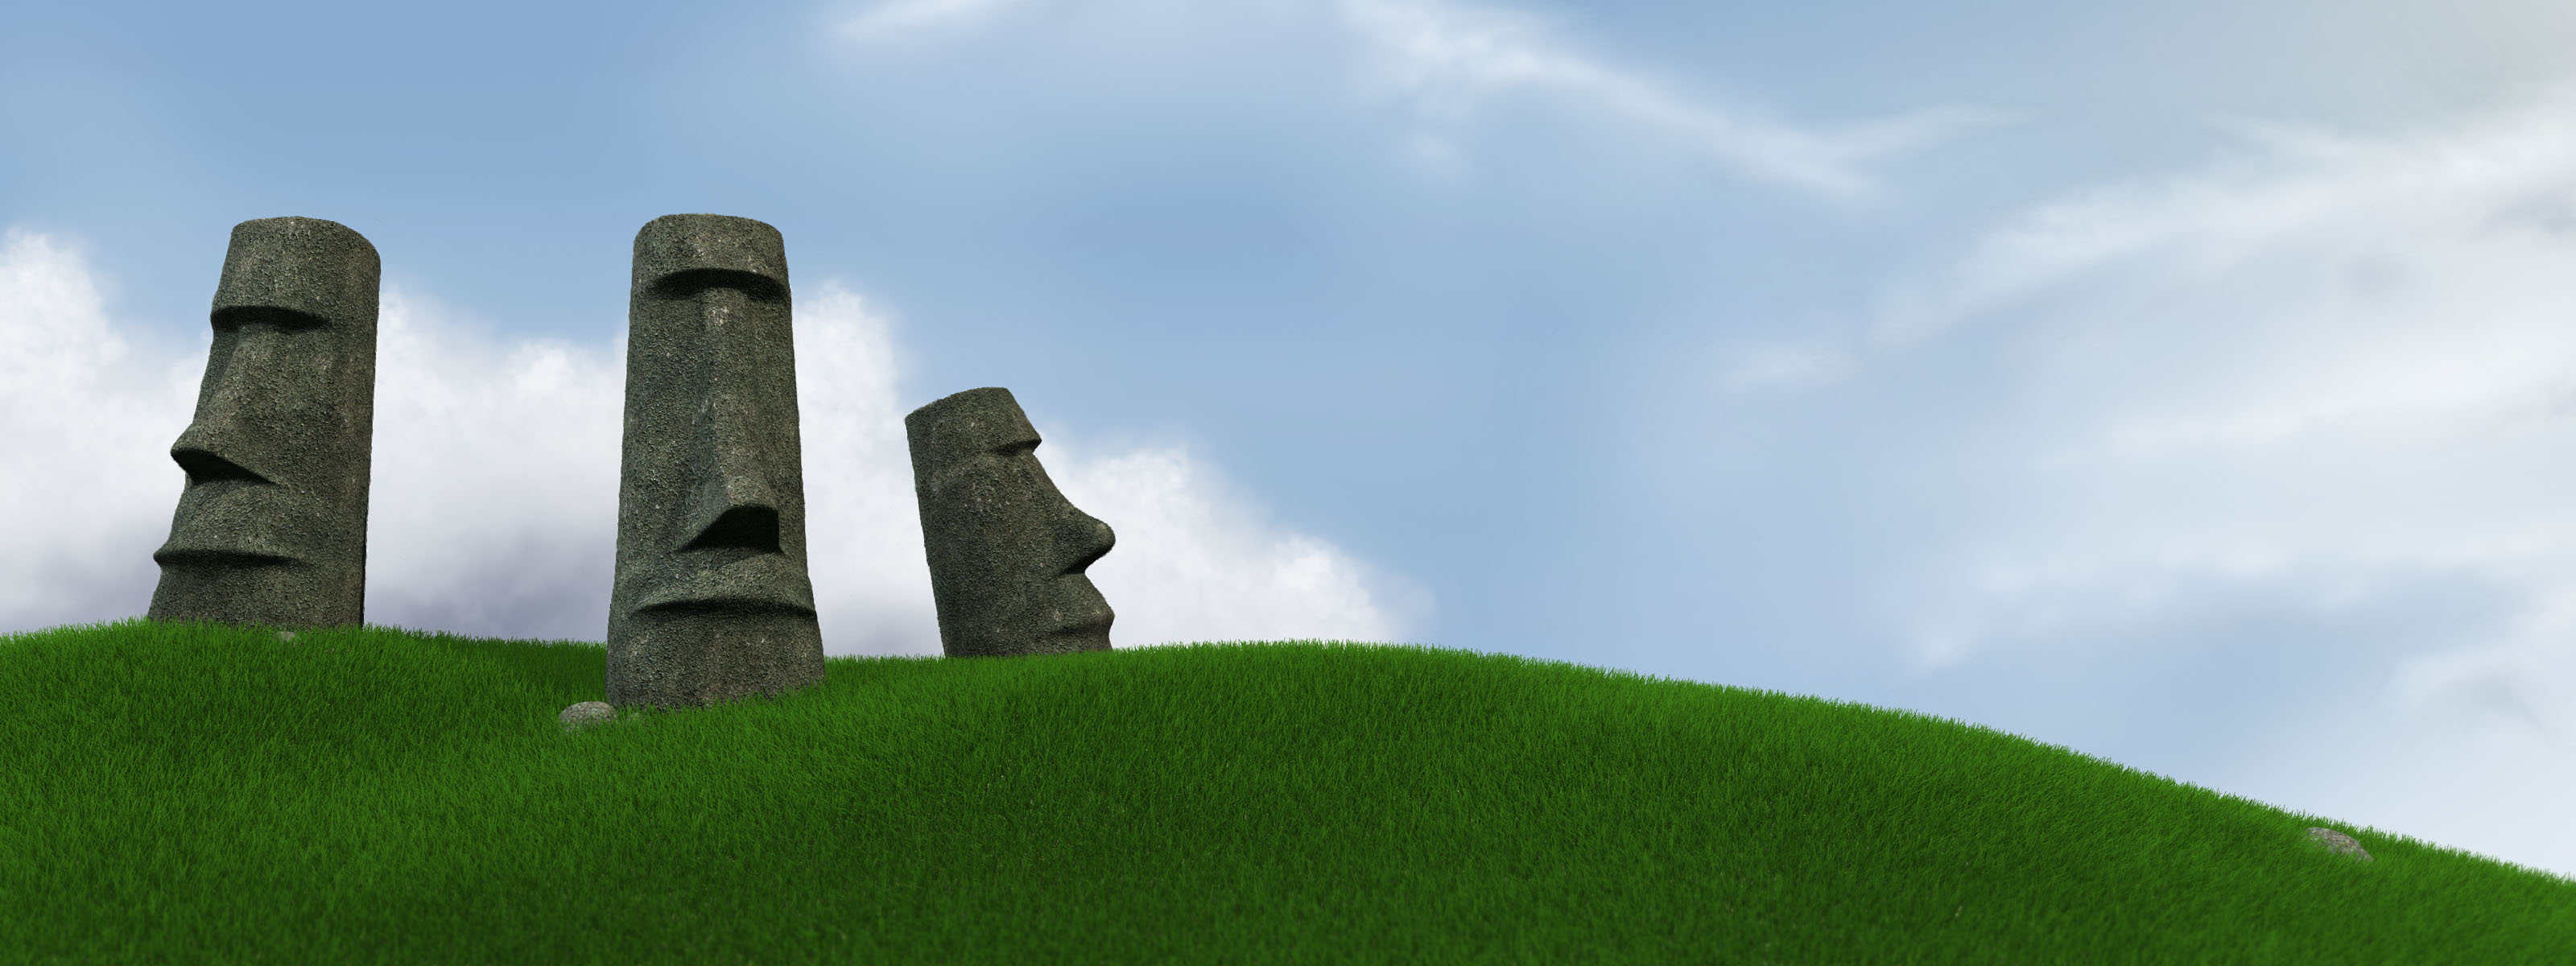 face, man made, moai, moai statues Image for desktop